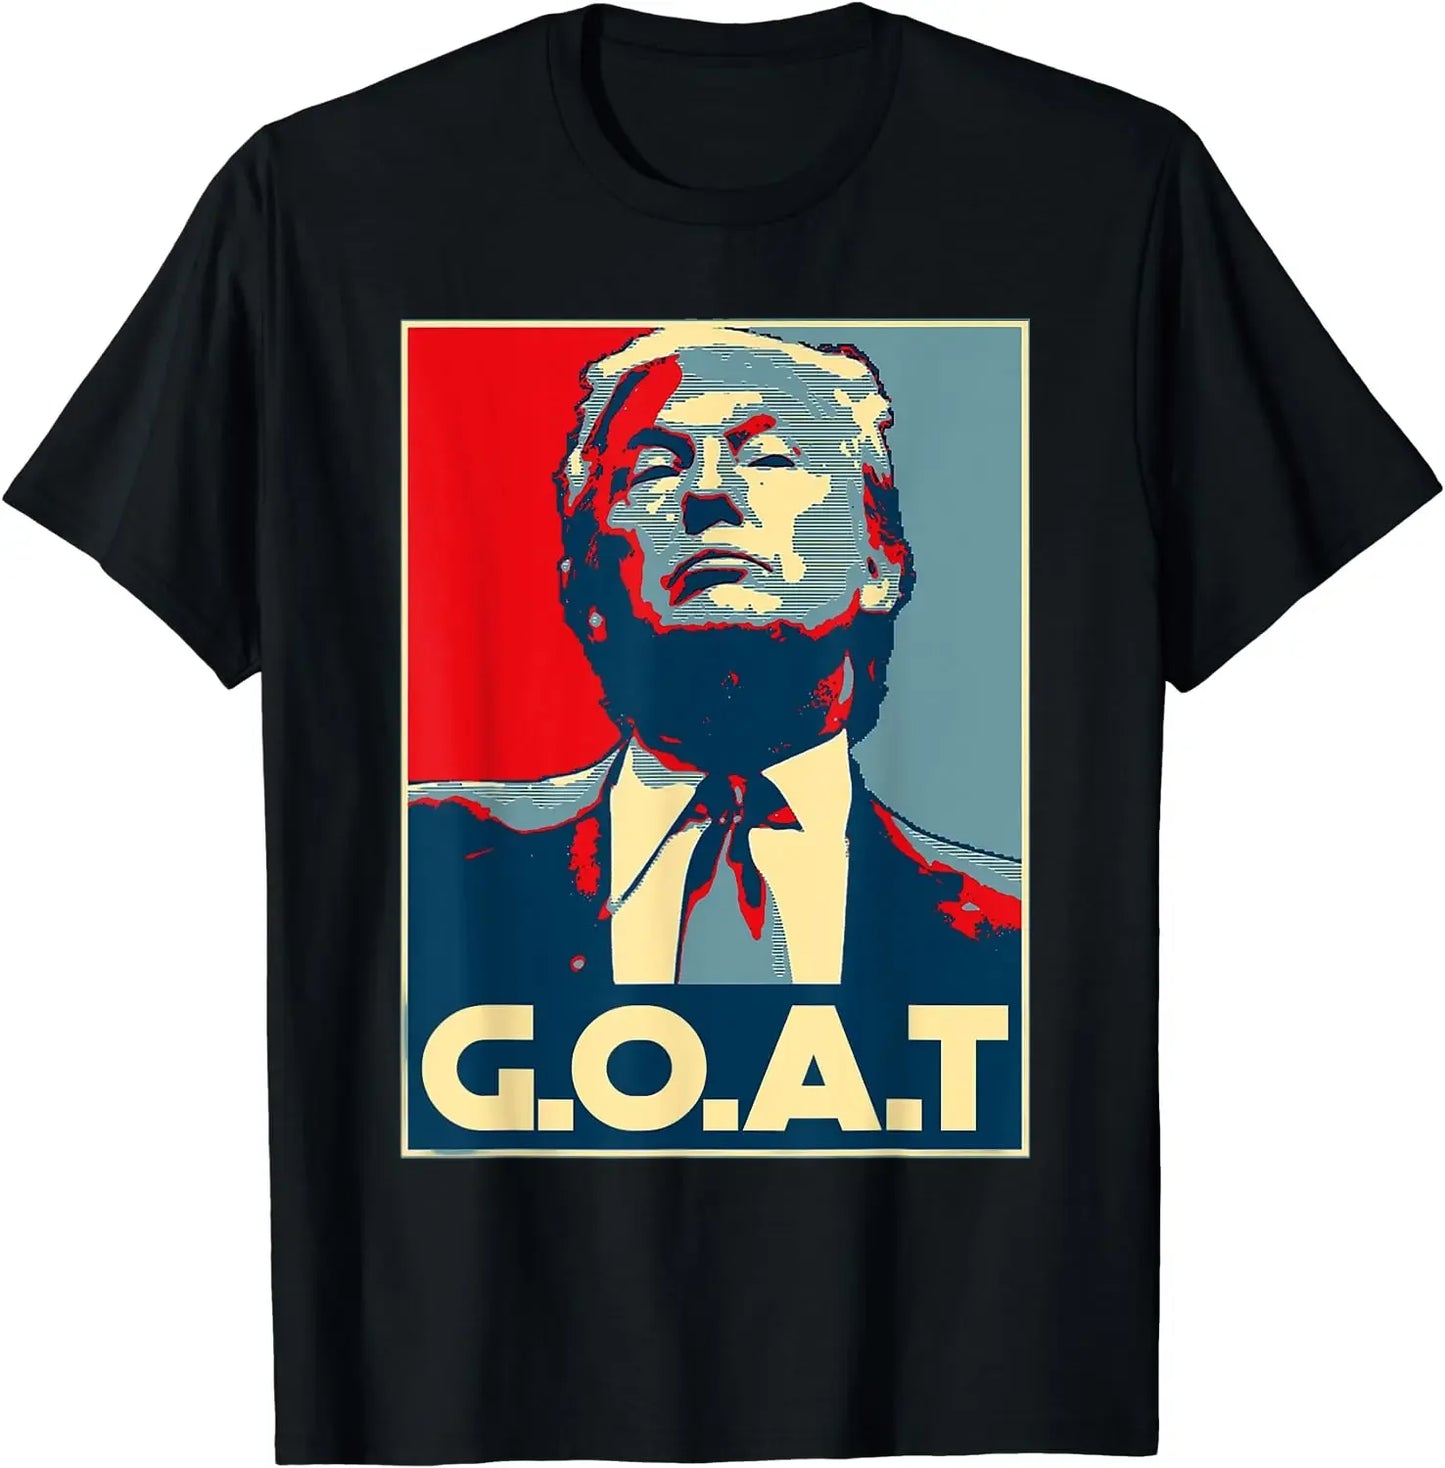 Support Liberty Trump Shirts